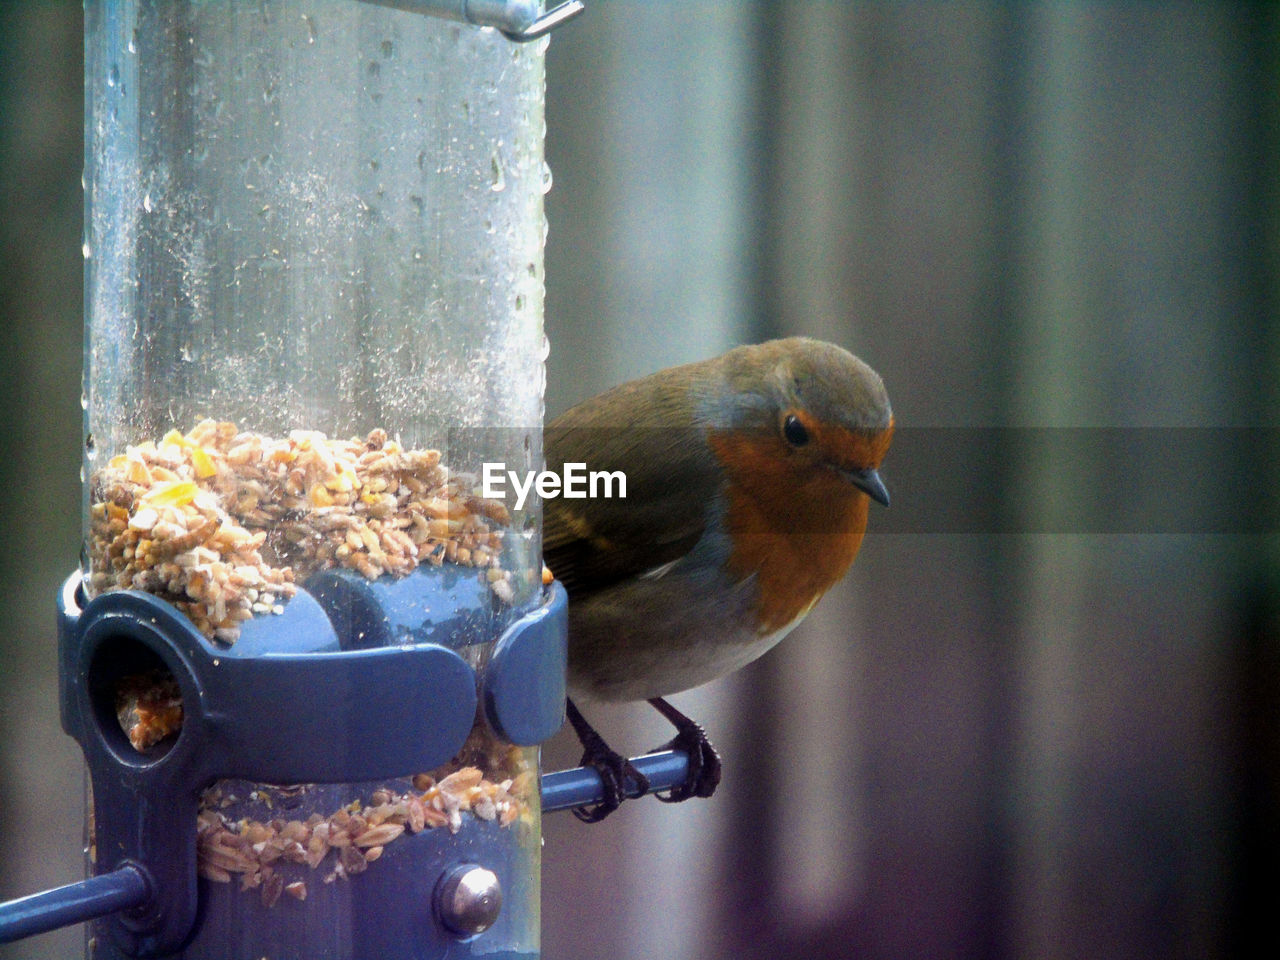 Robin perching on wet bird feeder